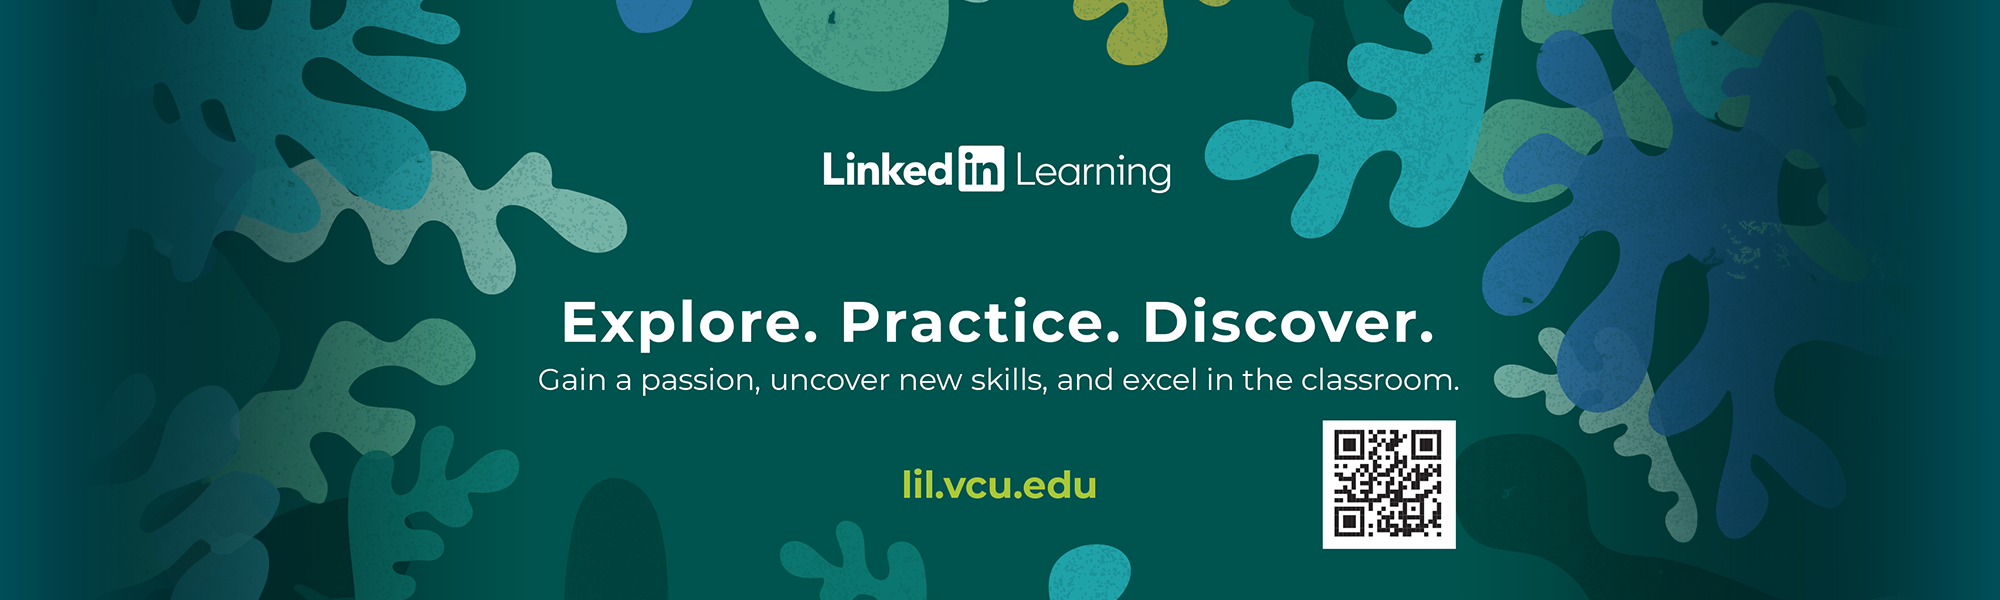 Log into LinkedIn Learning